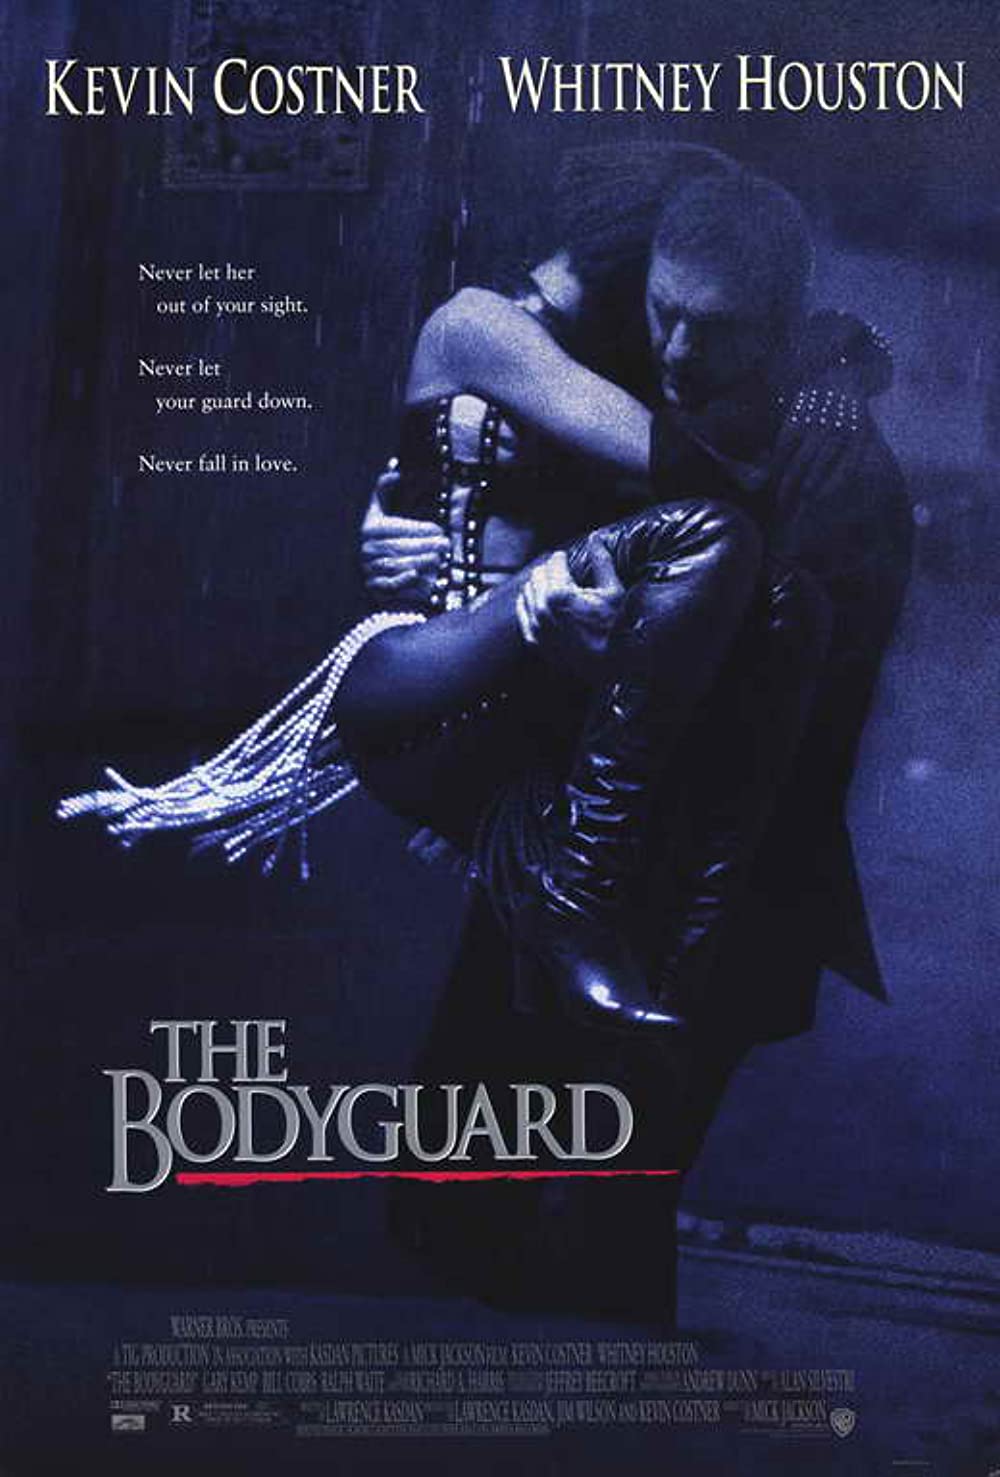 Stiahni si Filmy CZ/SK dabing The Bodyguard / Osobni strazce (1992)(Remastered)(1080p)(CZ/SK/EN) = CSFD 75%